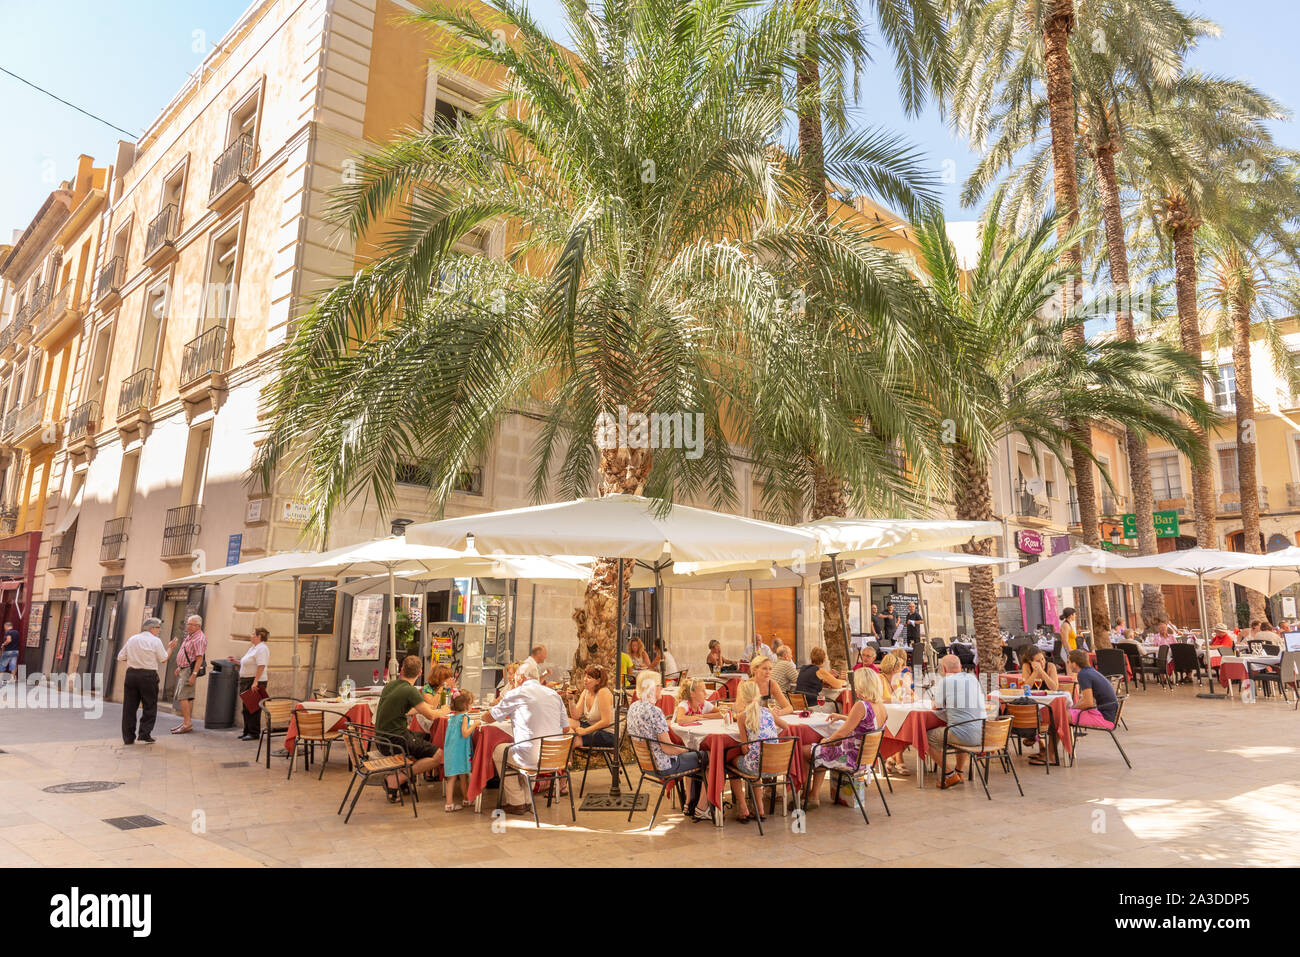 Pavement restaurant on Plaza Santisima Faz, Alicante, Costa Blanca, Spain Stock Photo